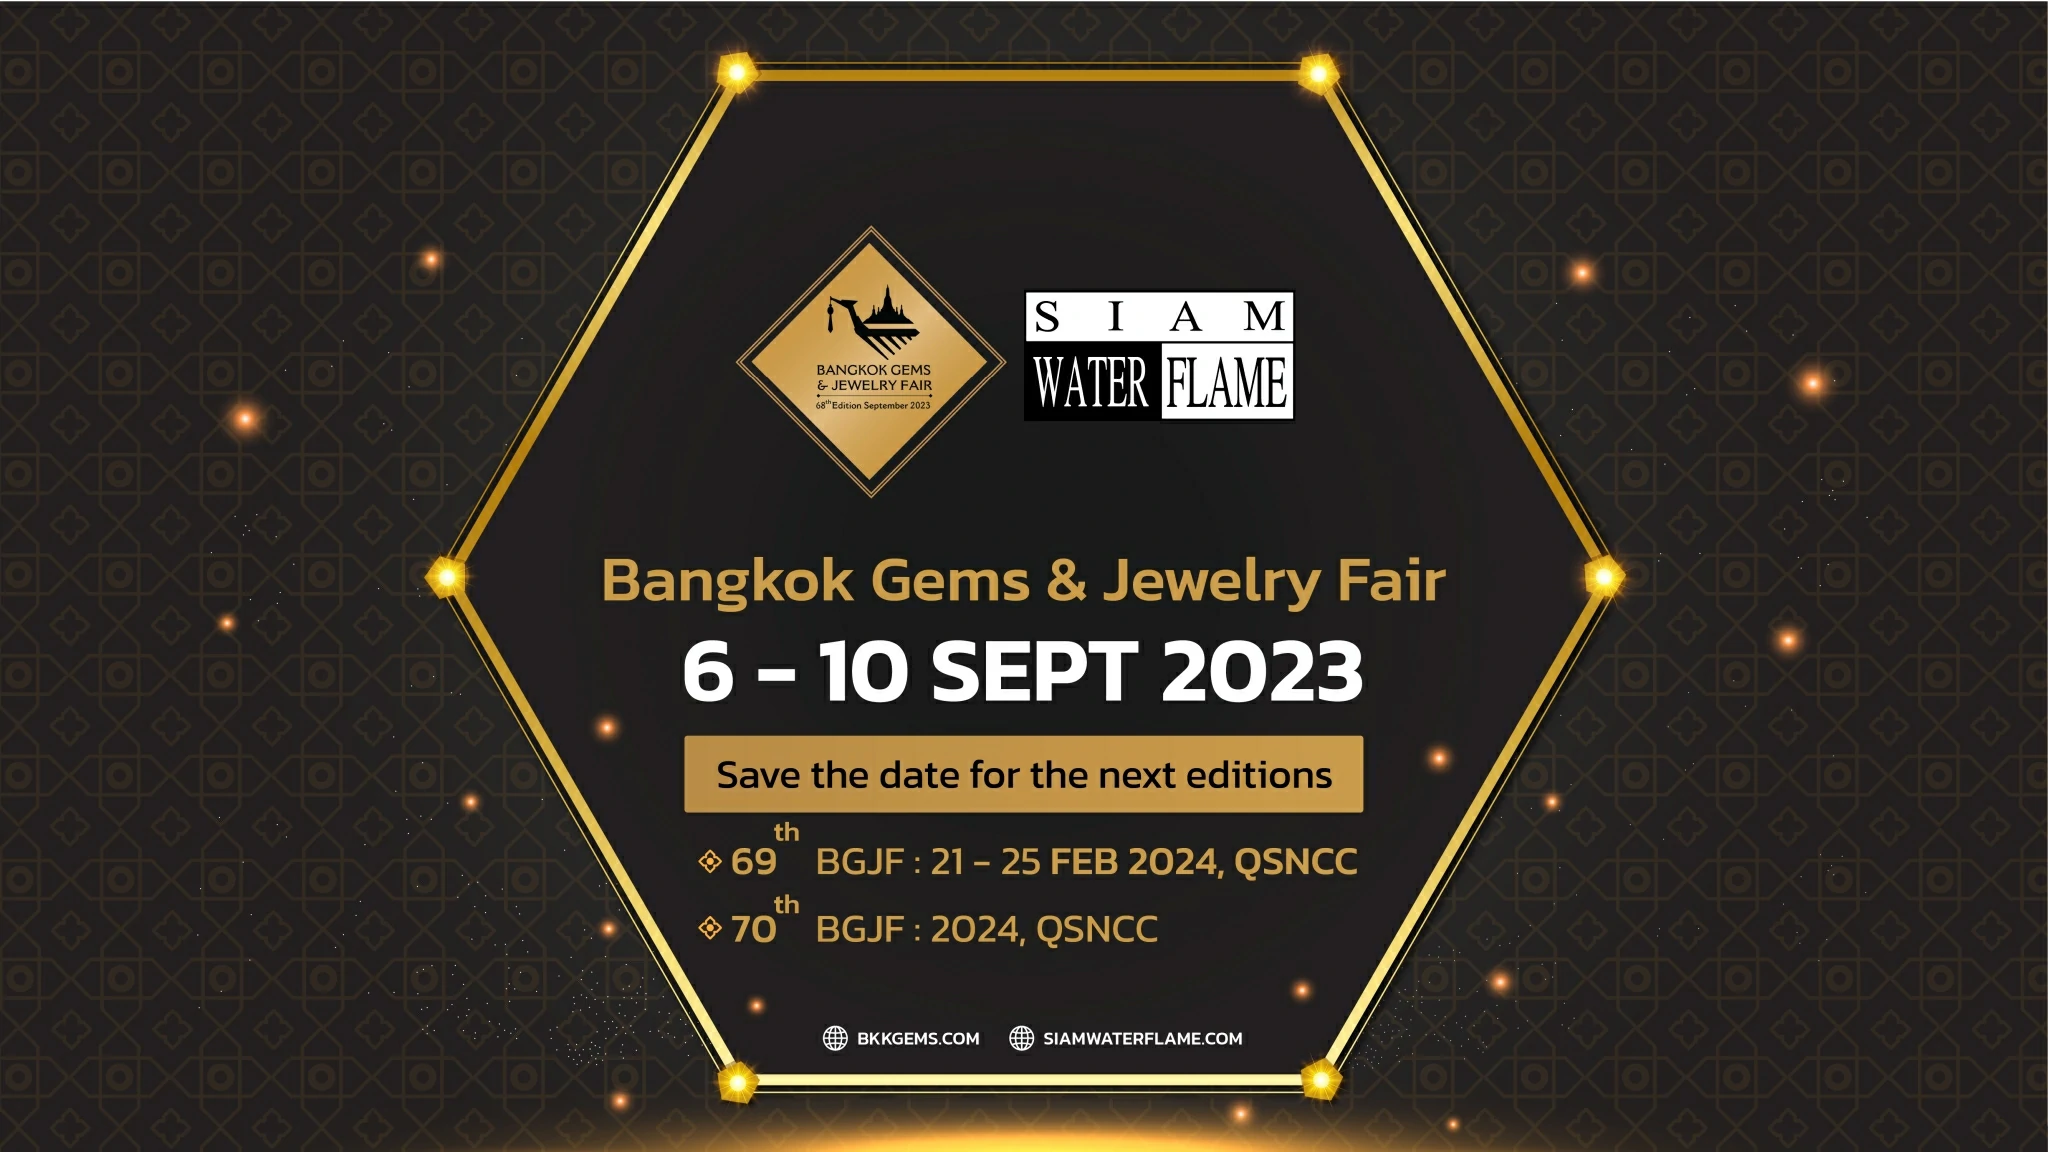 Bangkok Gems & Jewelry Fair 2023